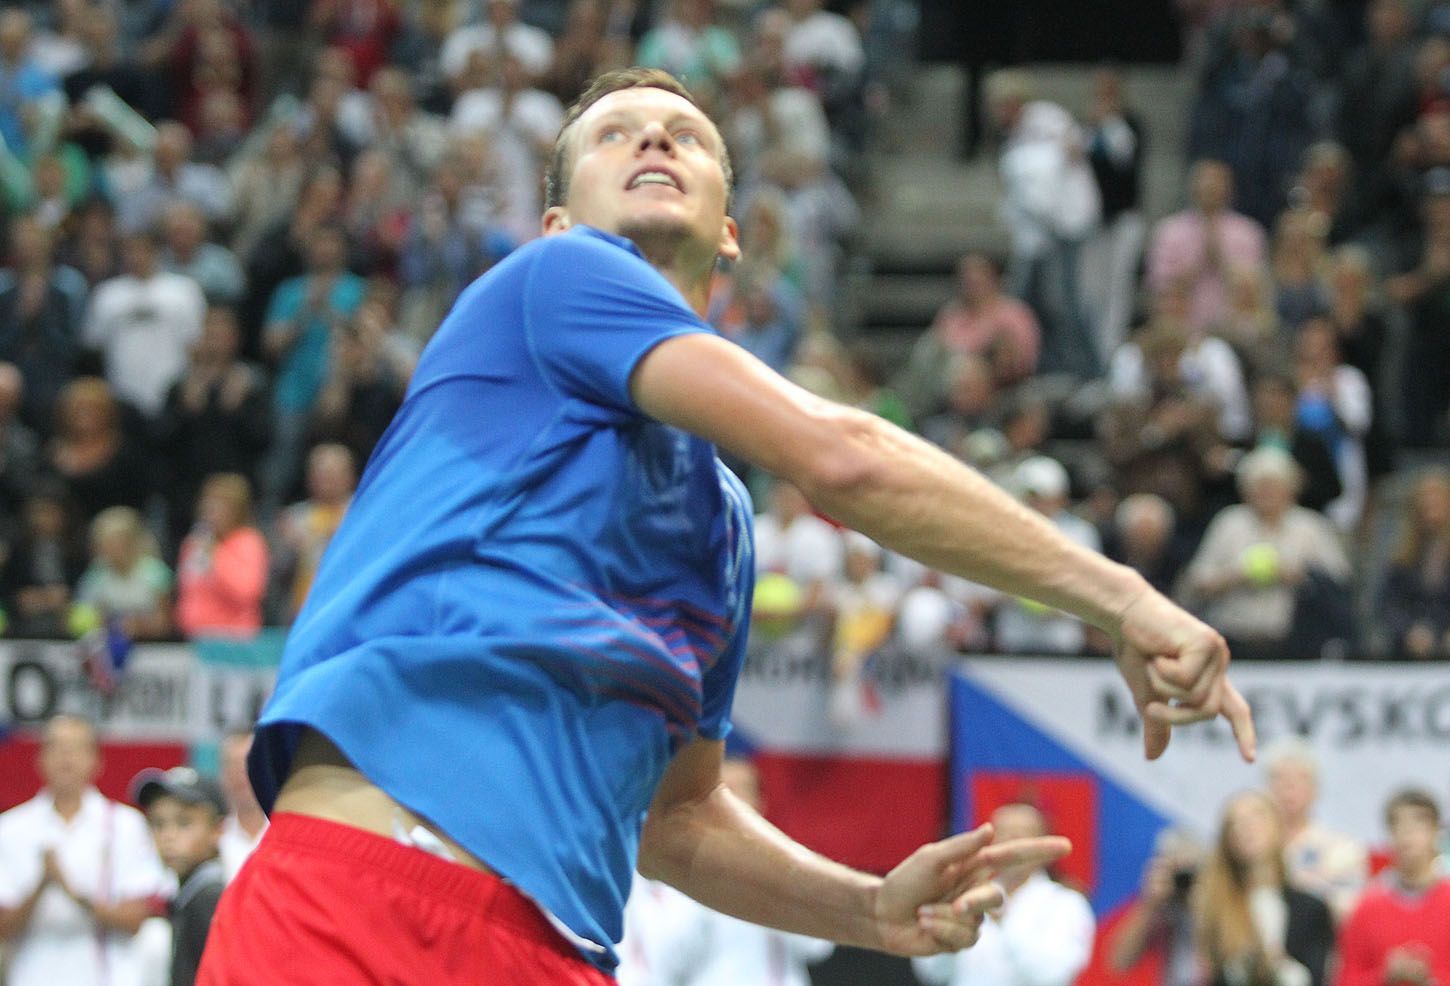 Semifinále Davis Cupu - Česko vs. Argentina (Berdych)